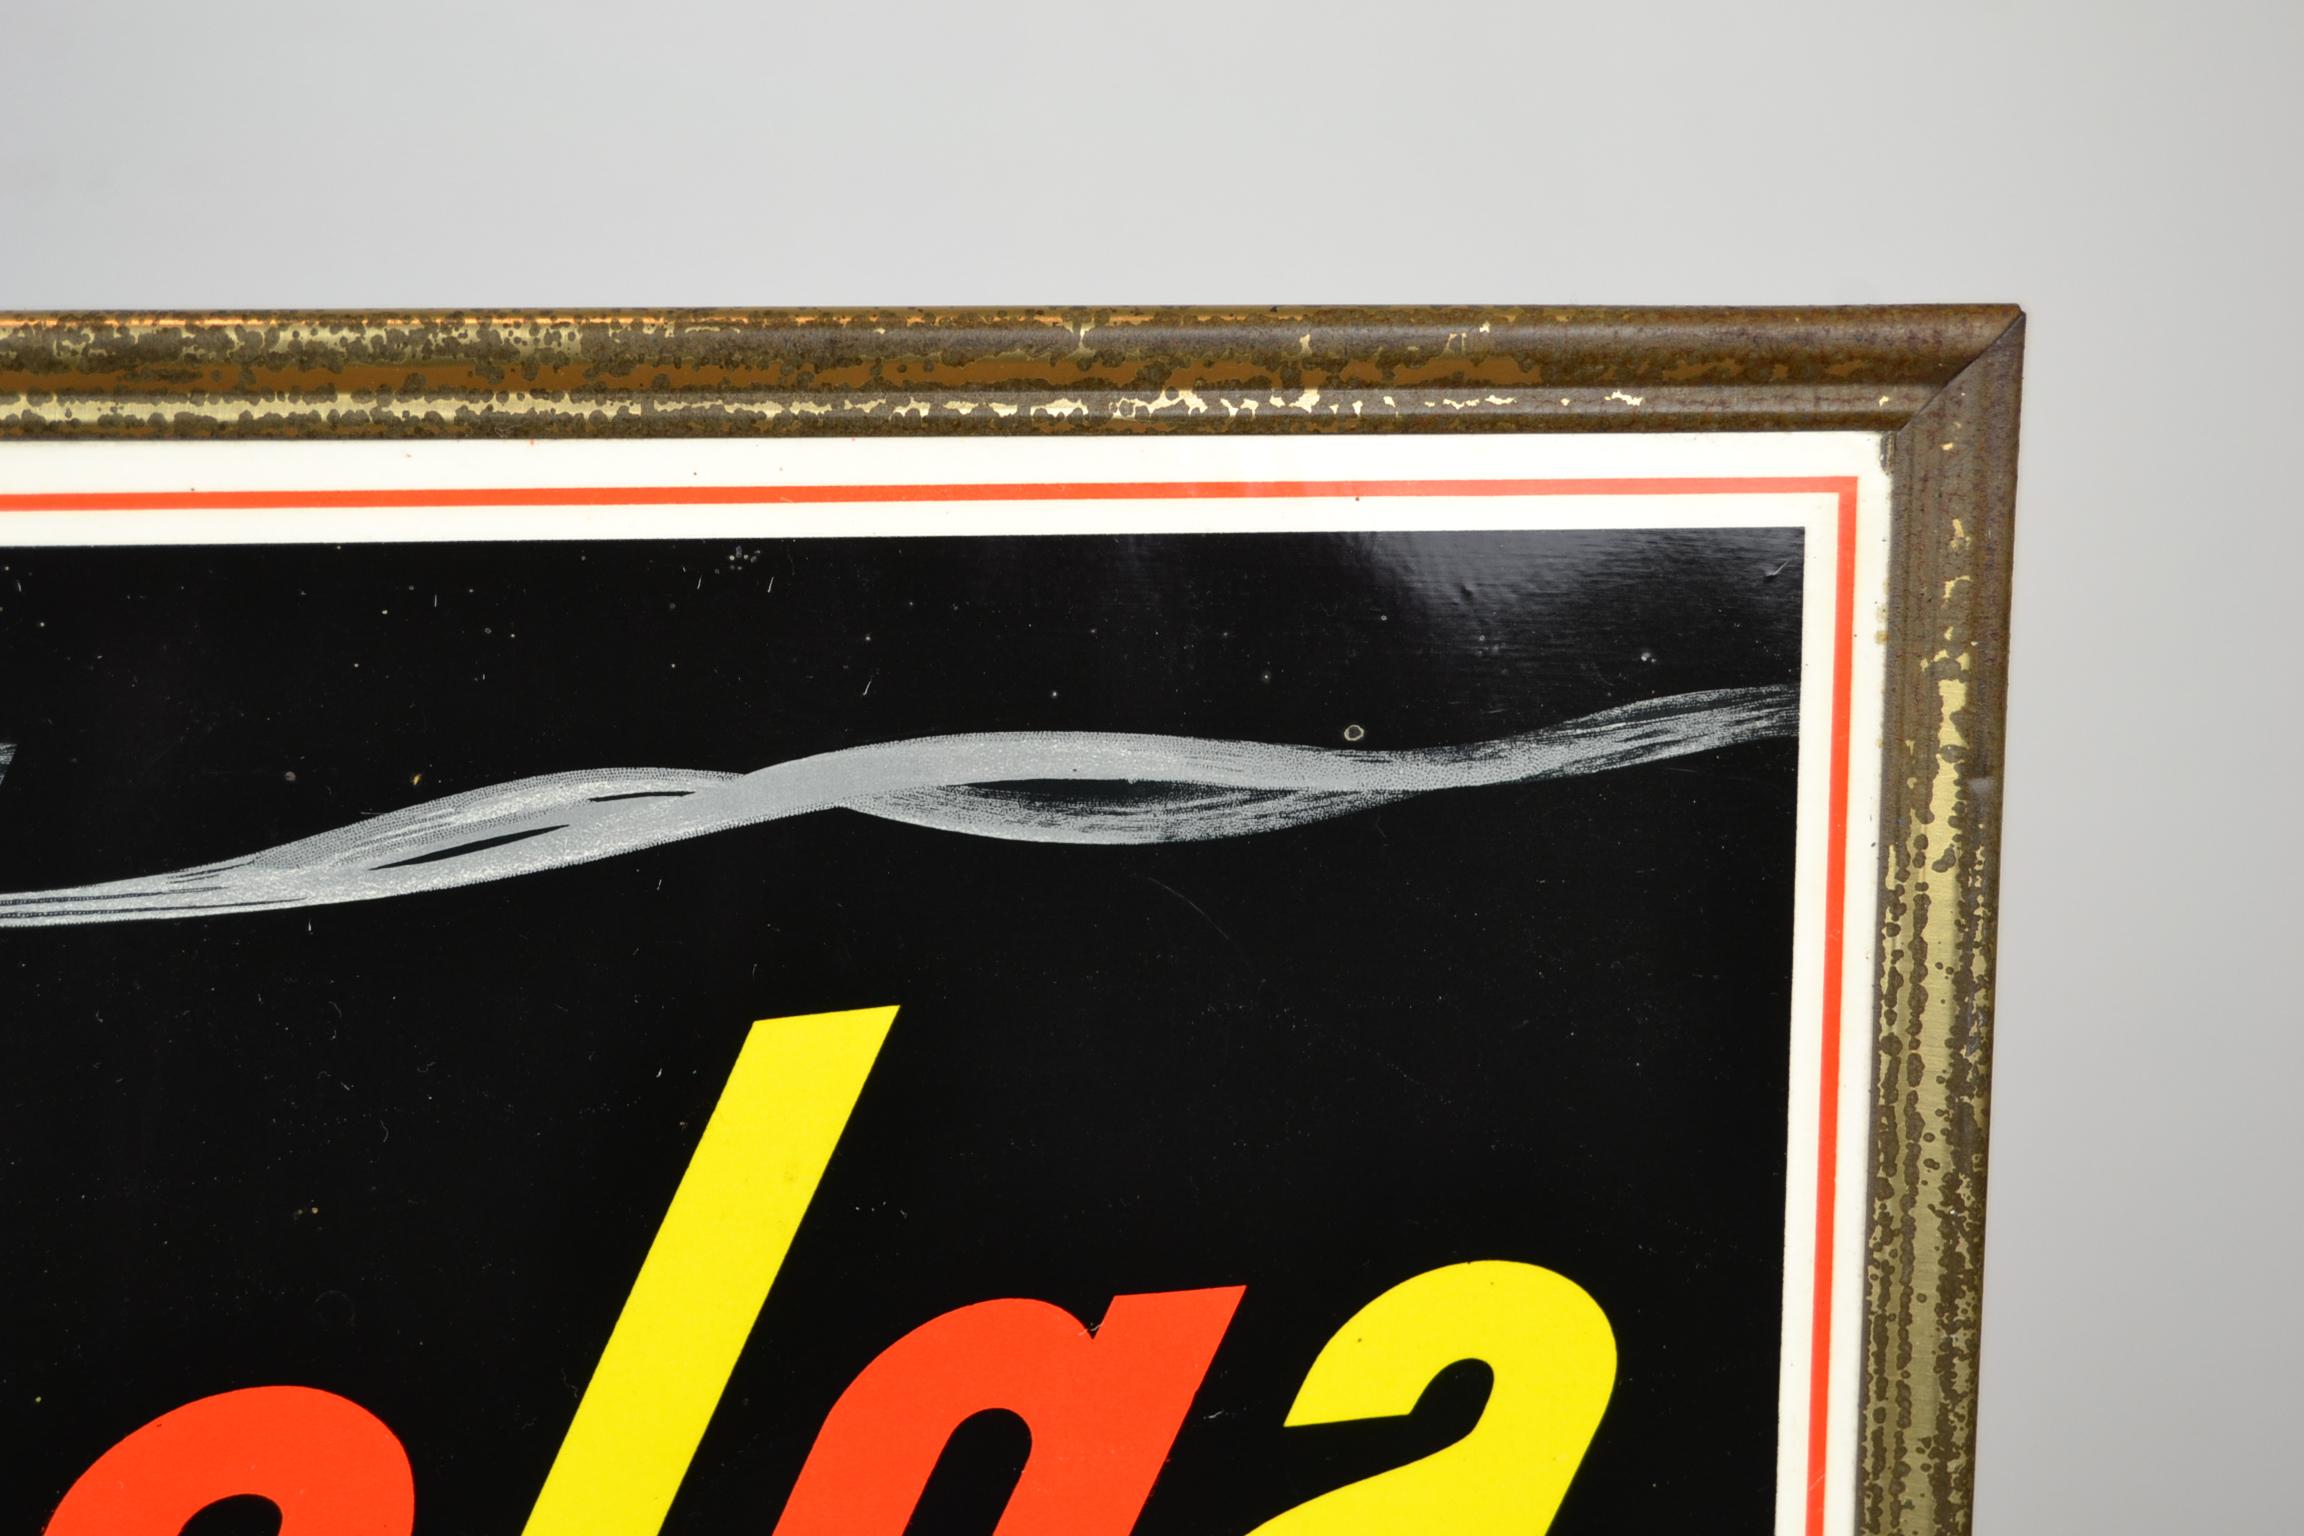 Belgian Belga Cigarettes Advertising Sign by Rob Otten, Framed Cellulite, 1954